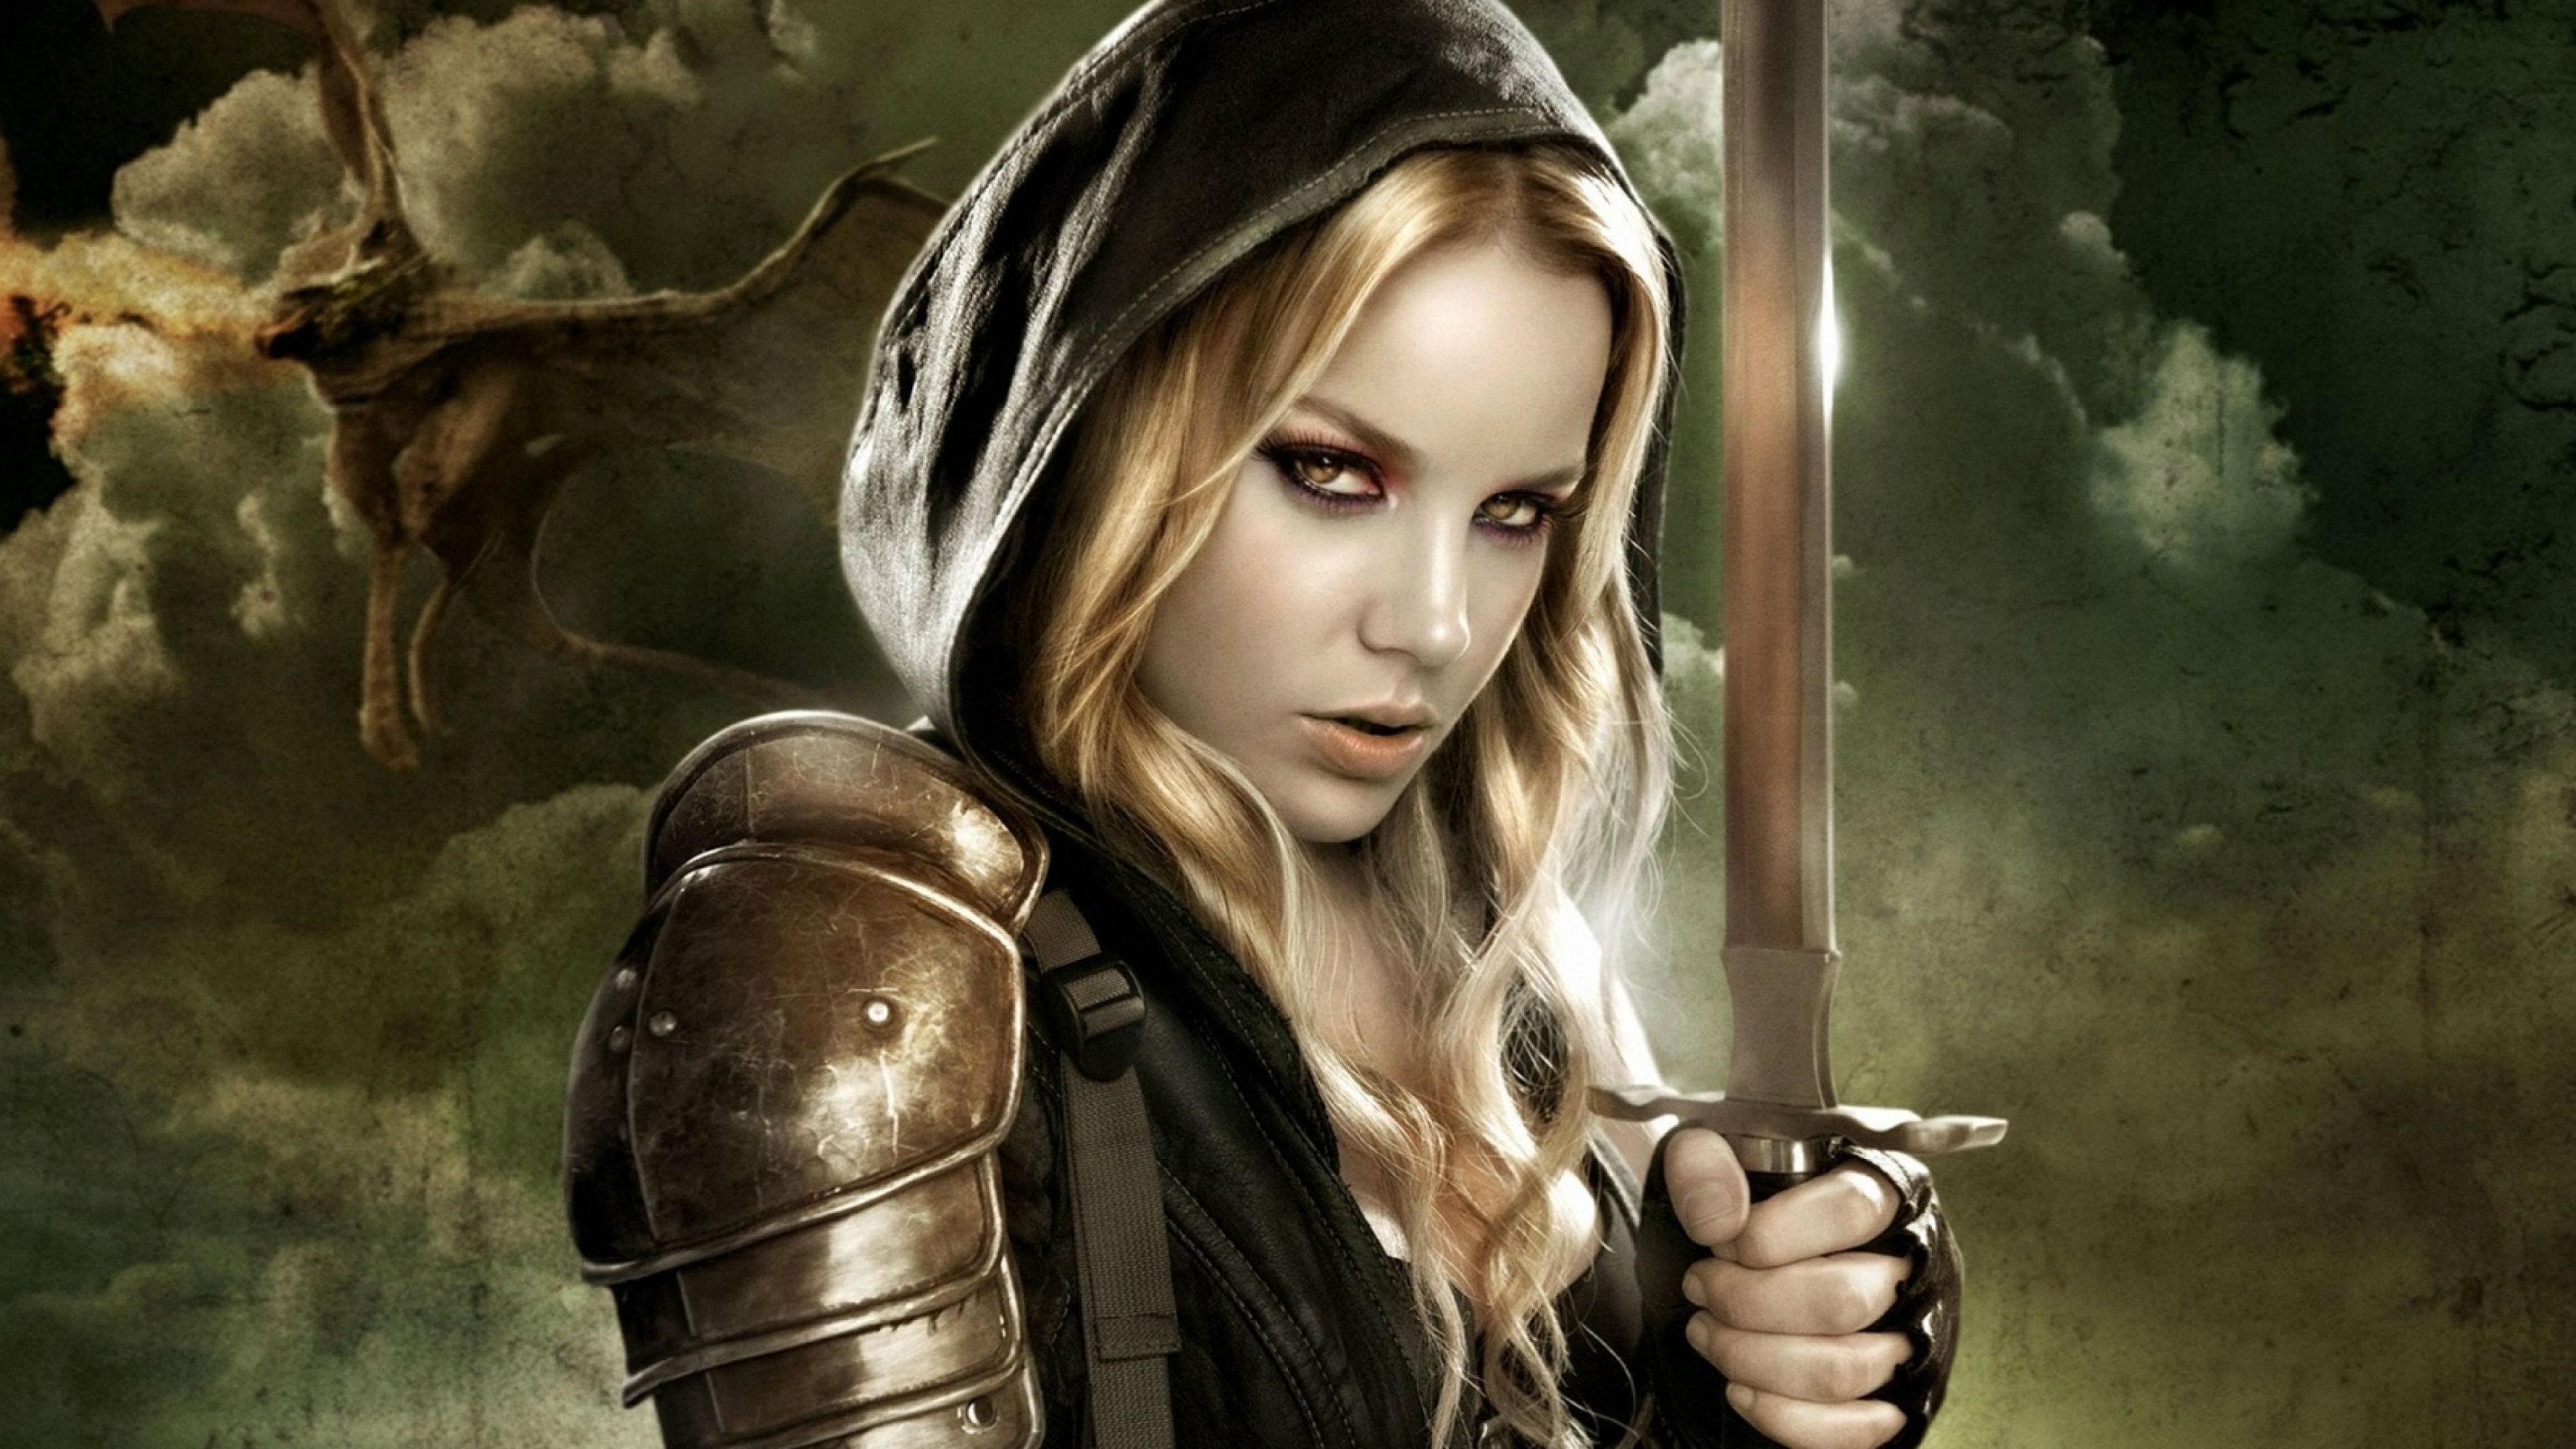 Warrior blonde fantasy girl wallpaper. Desktop and mobile. Fantasy girl, Warrior girl, Fantasy warrior